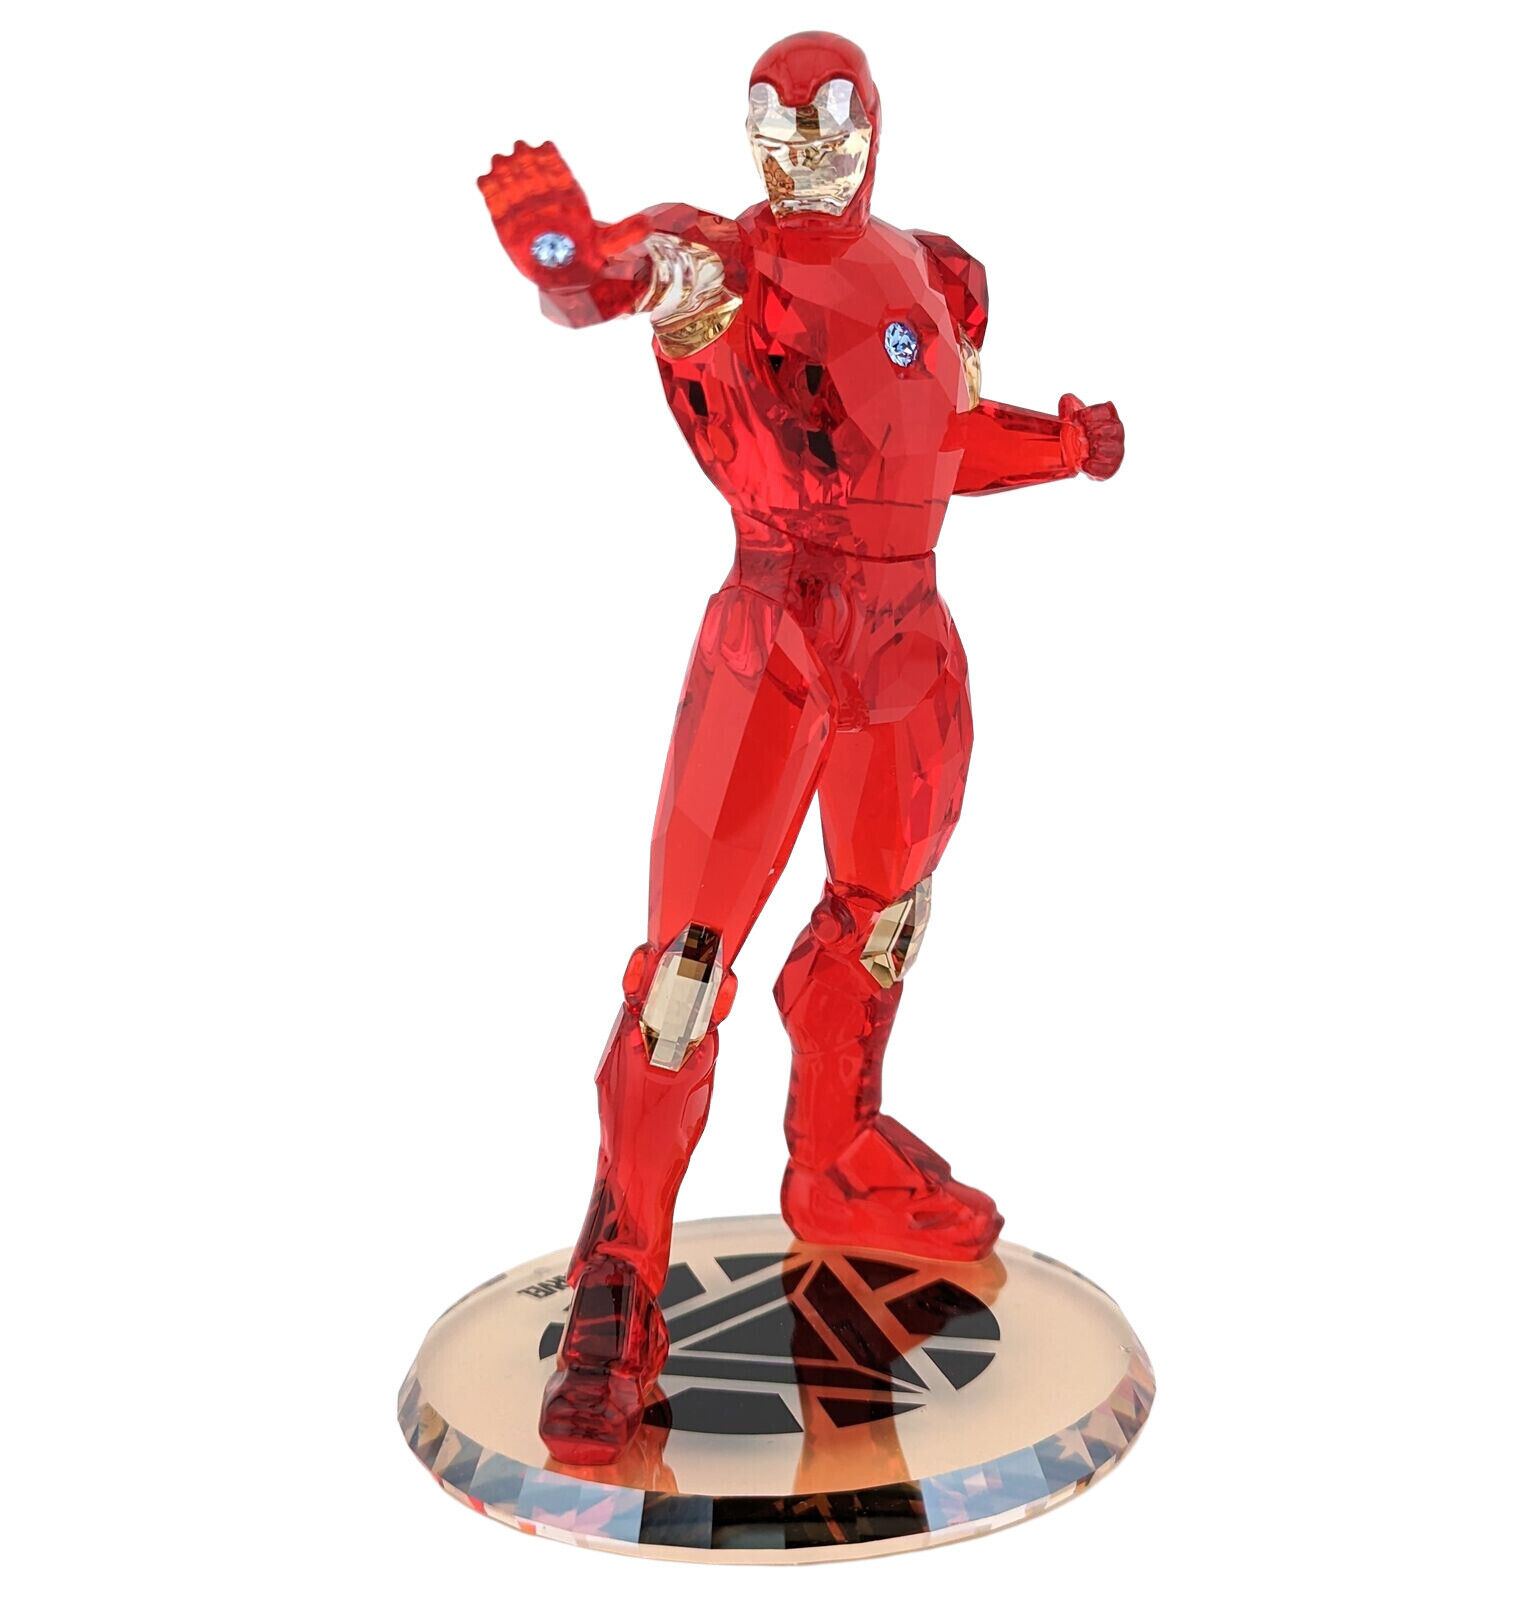 Swarovski Marvel Iron Man Crystal Figurine - Red (5649305)